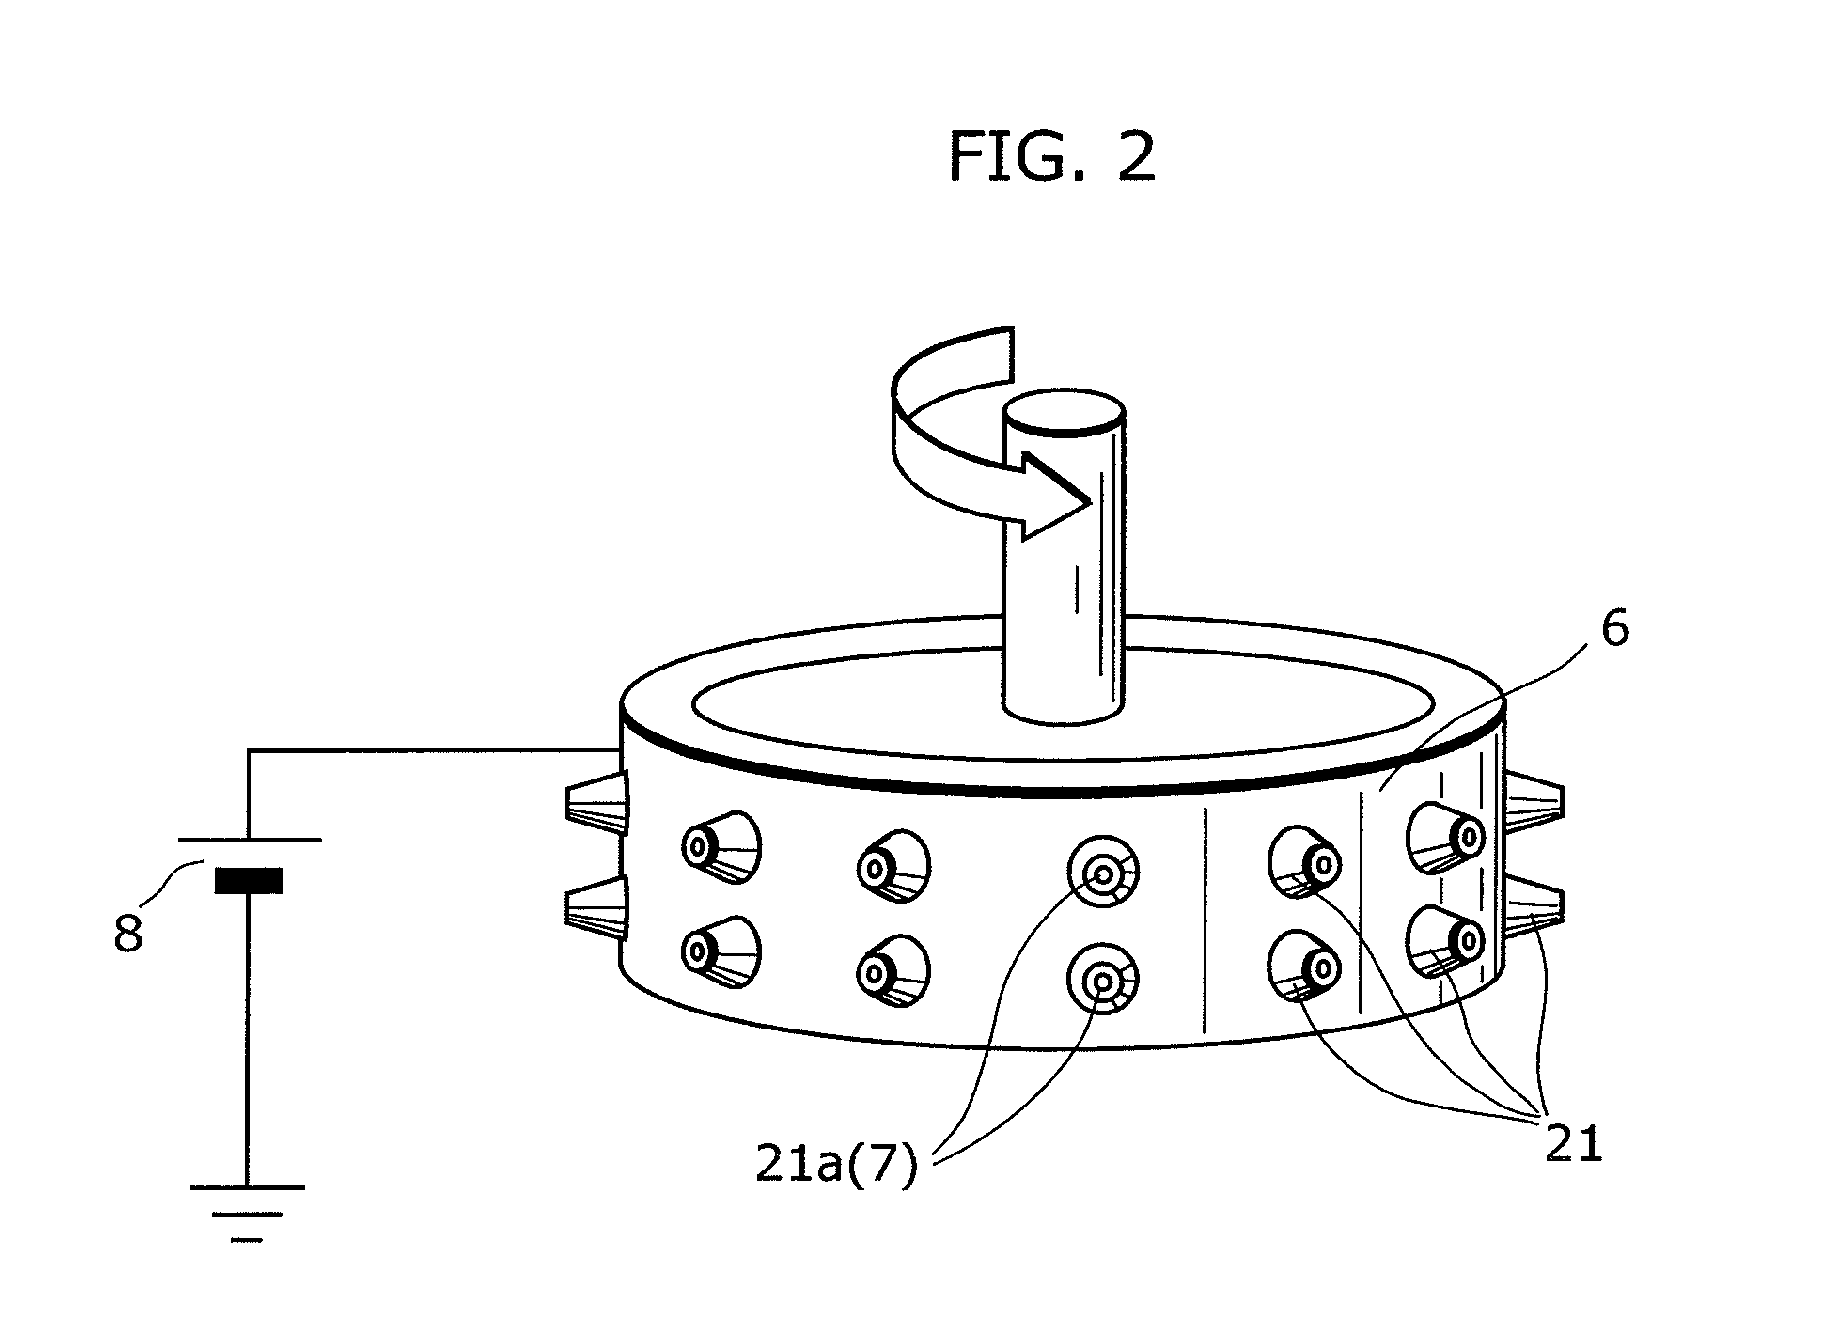 Nanofiber spinning method and device